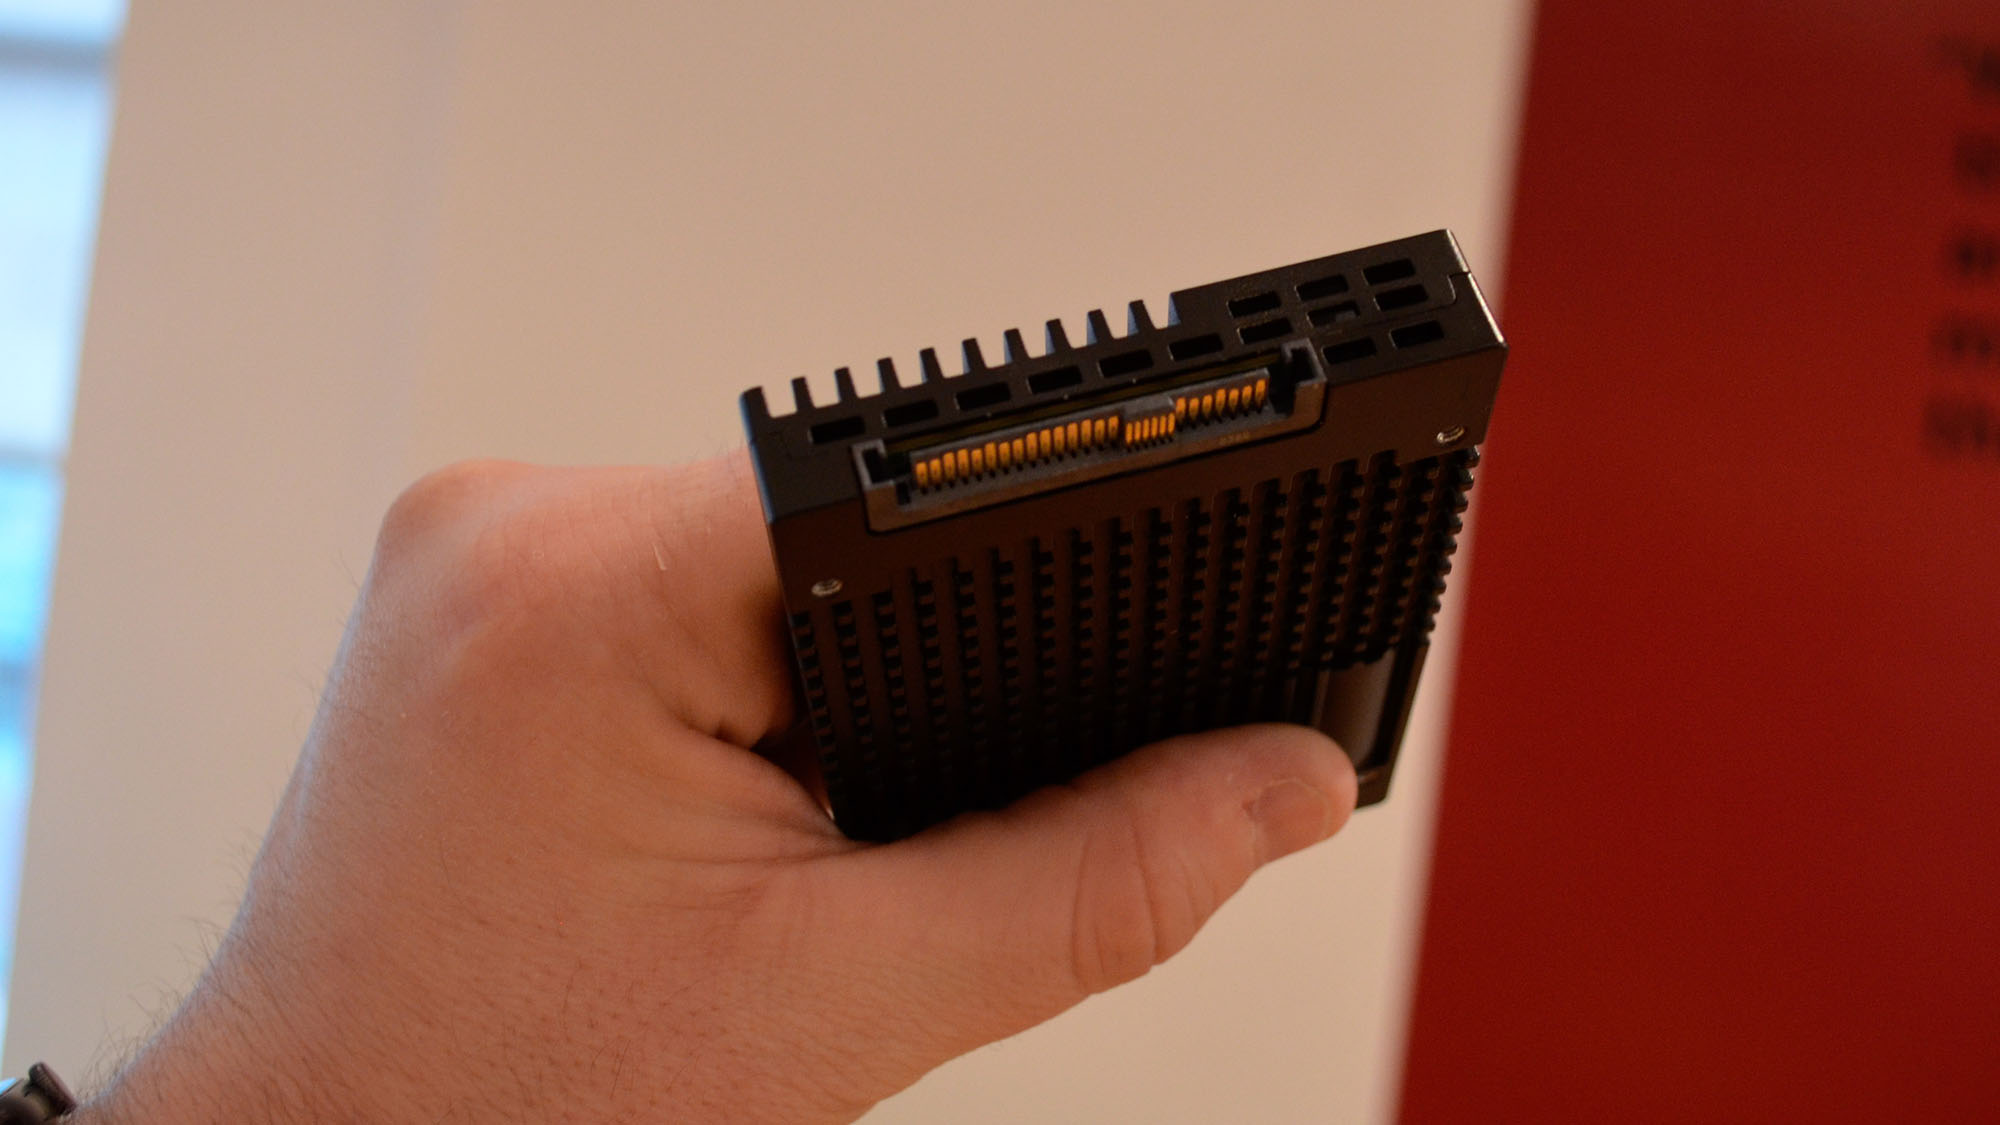 A FlumeIO 5900-series SSD in a masculine hand